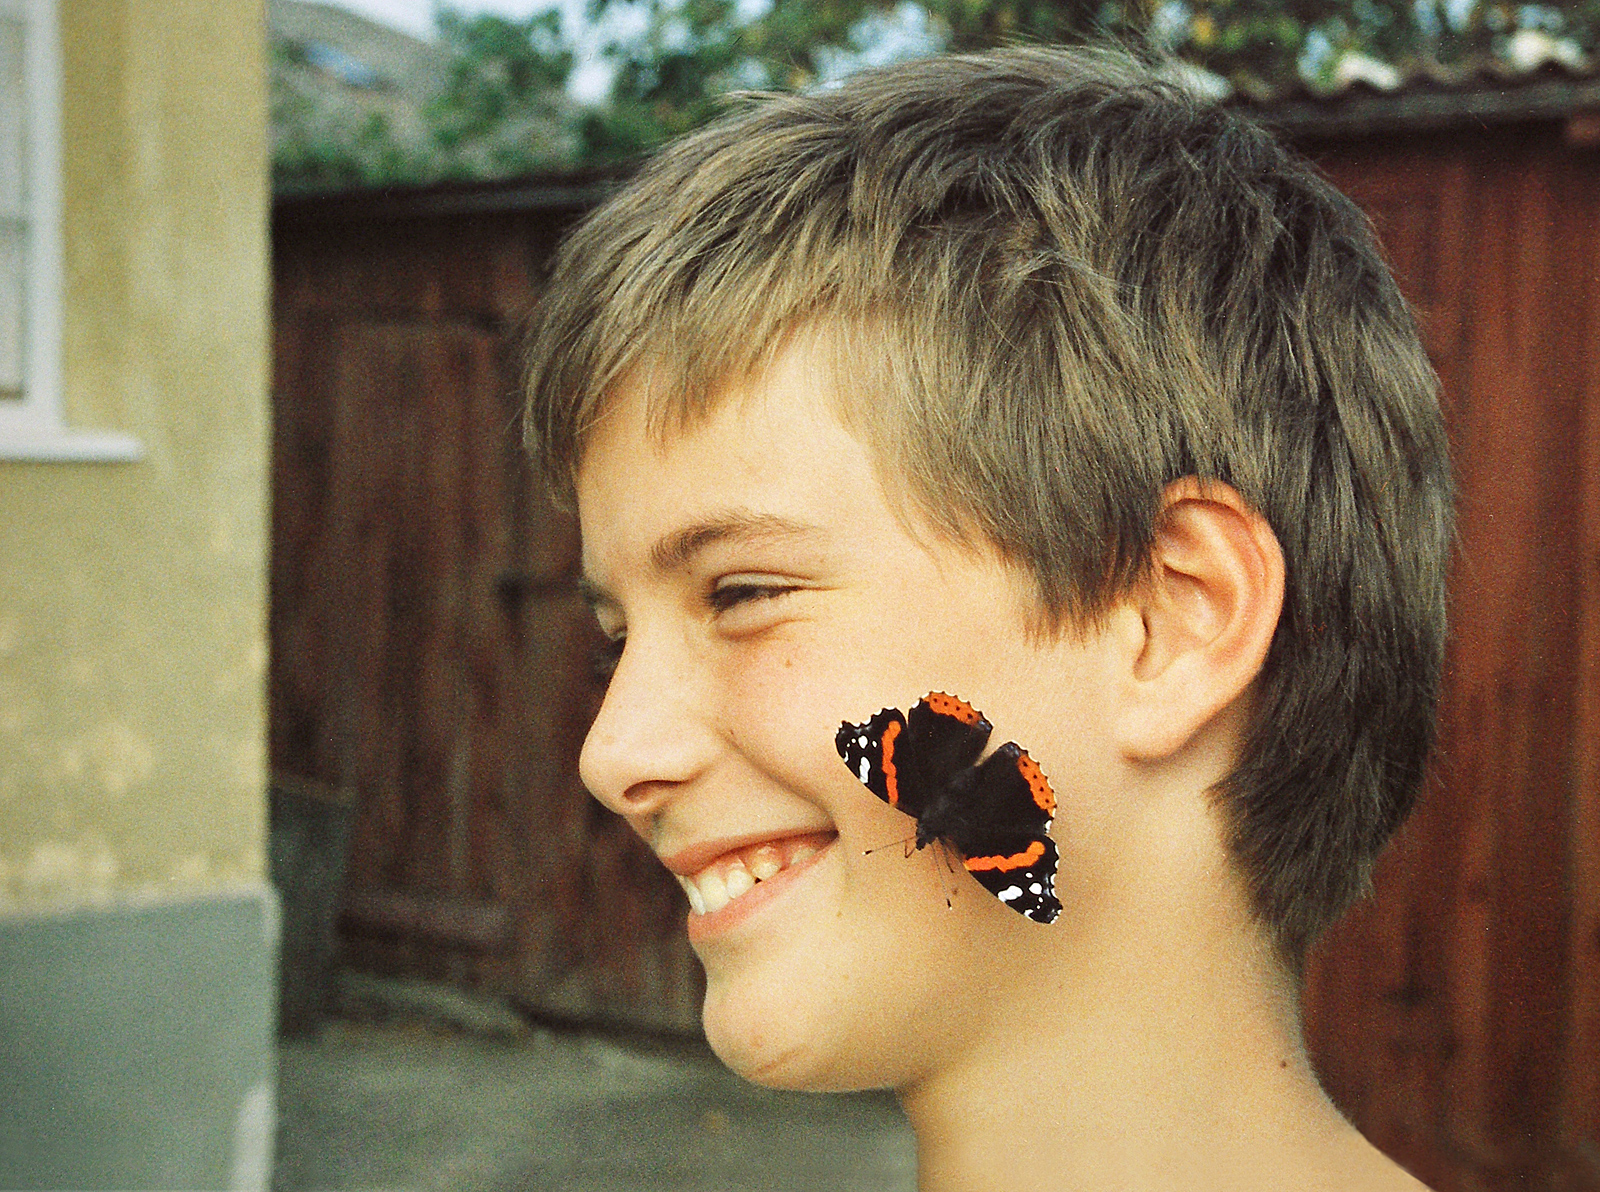 Chlapec s motýlem